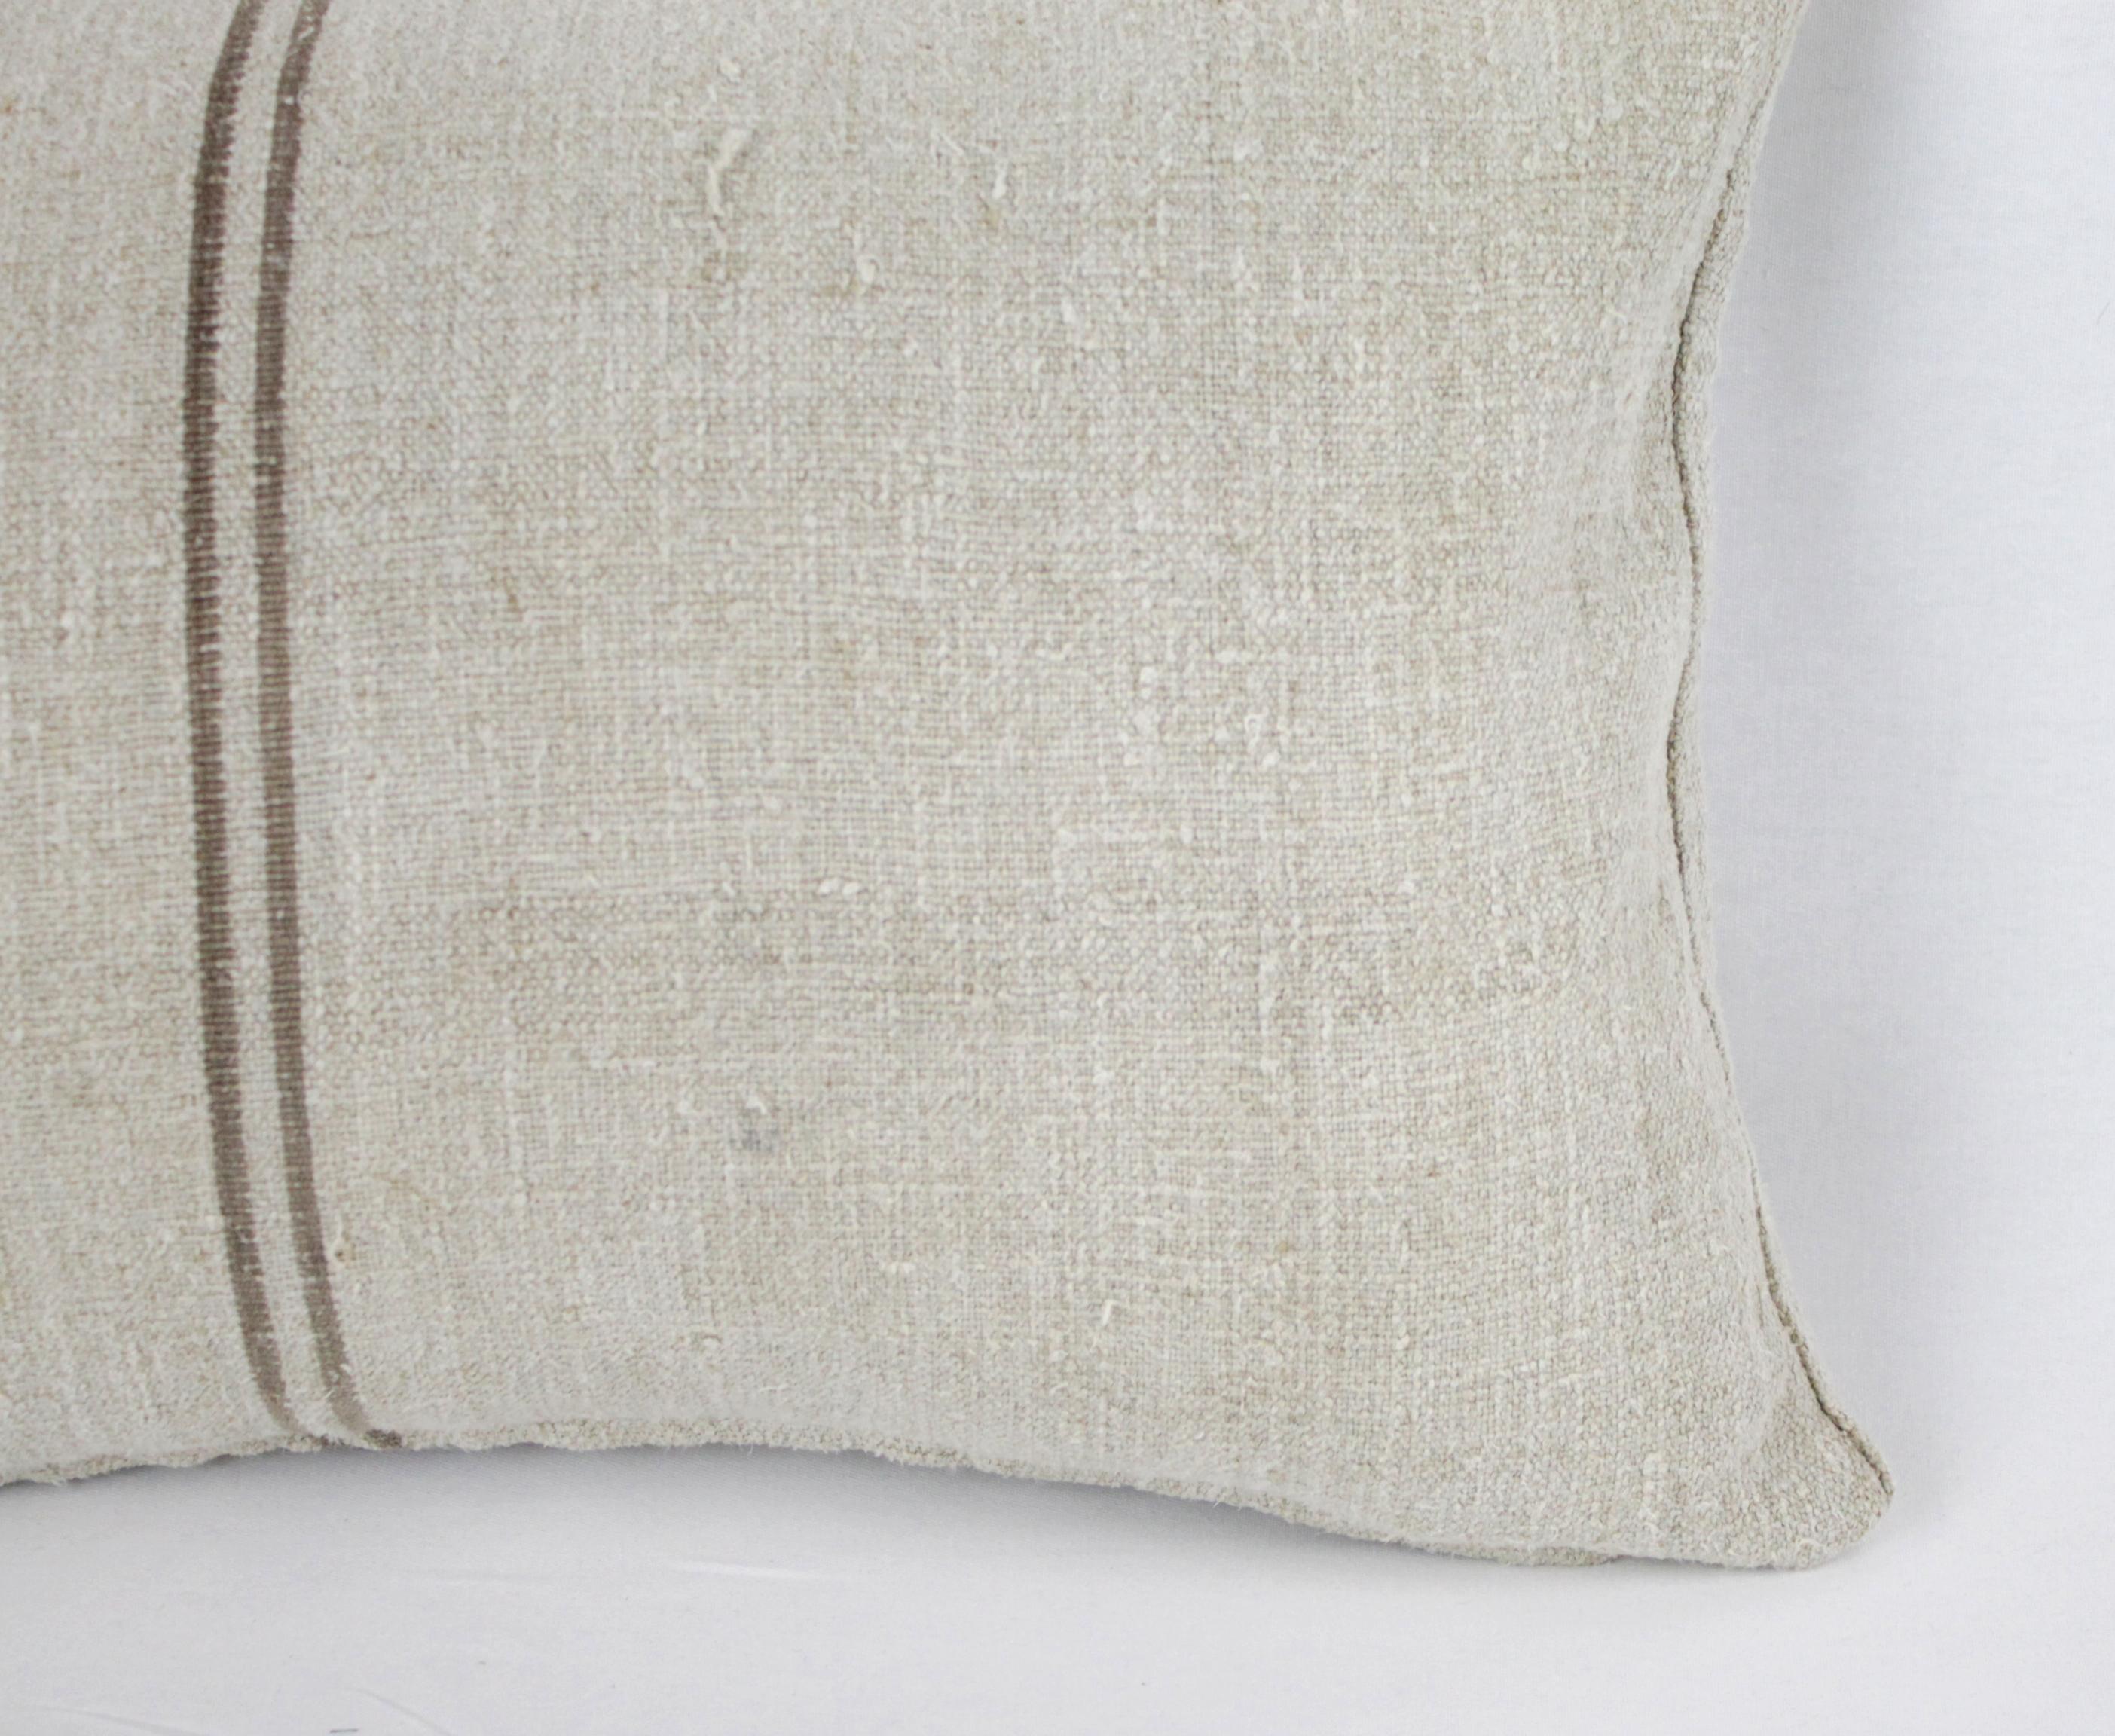 Linen Antique Nubby 19th Century European Brown Stripe Grain Sack Pillows